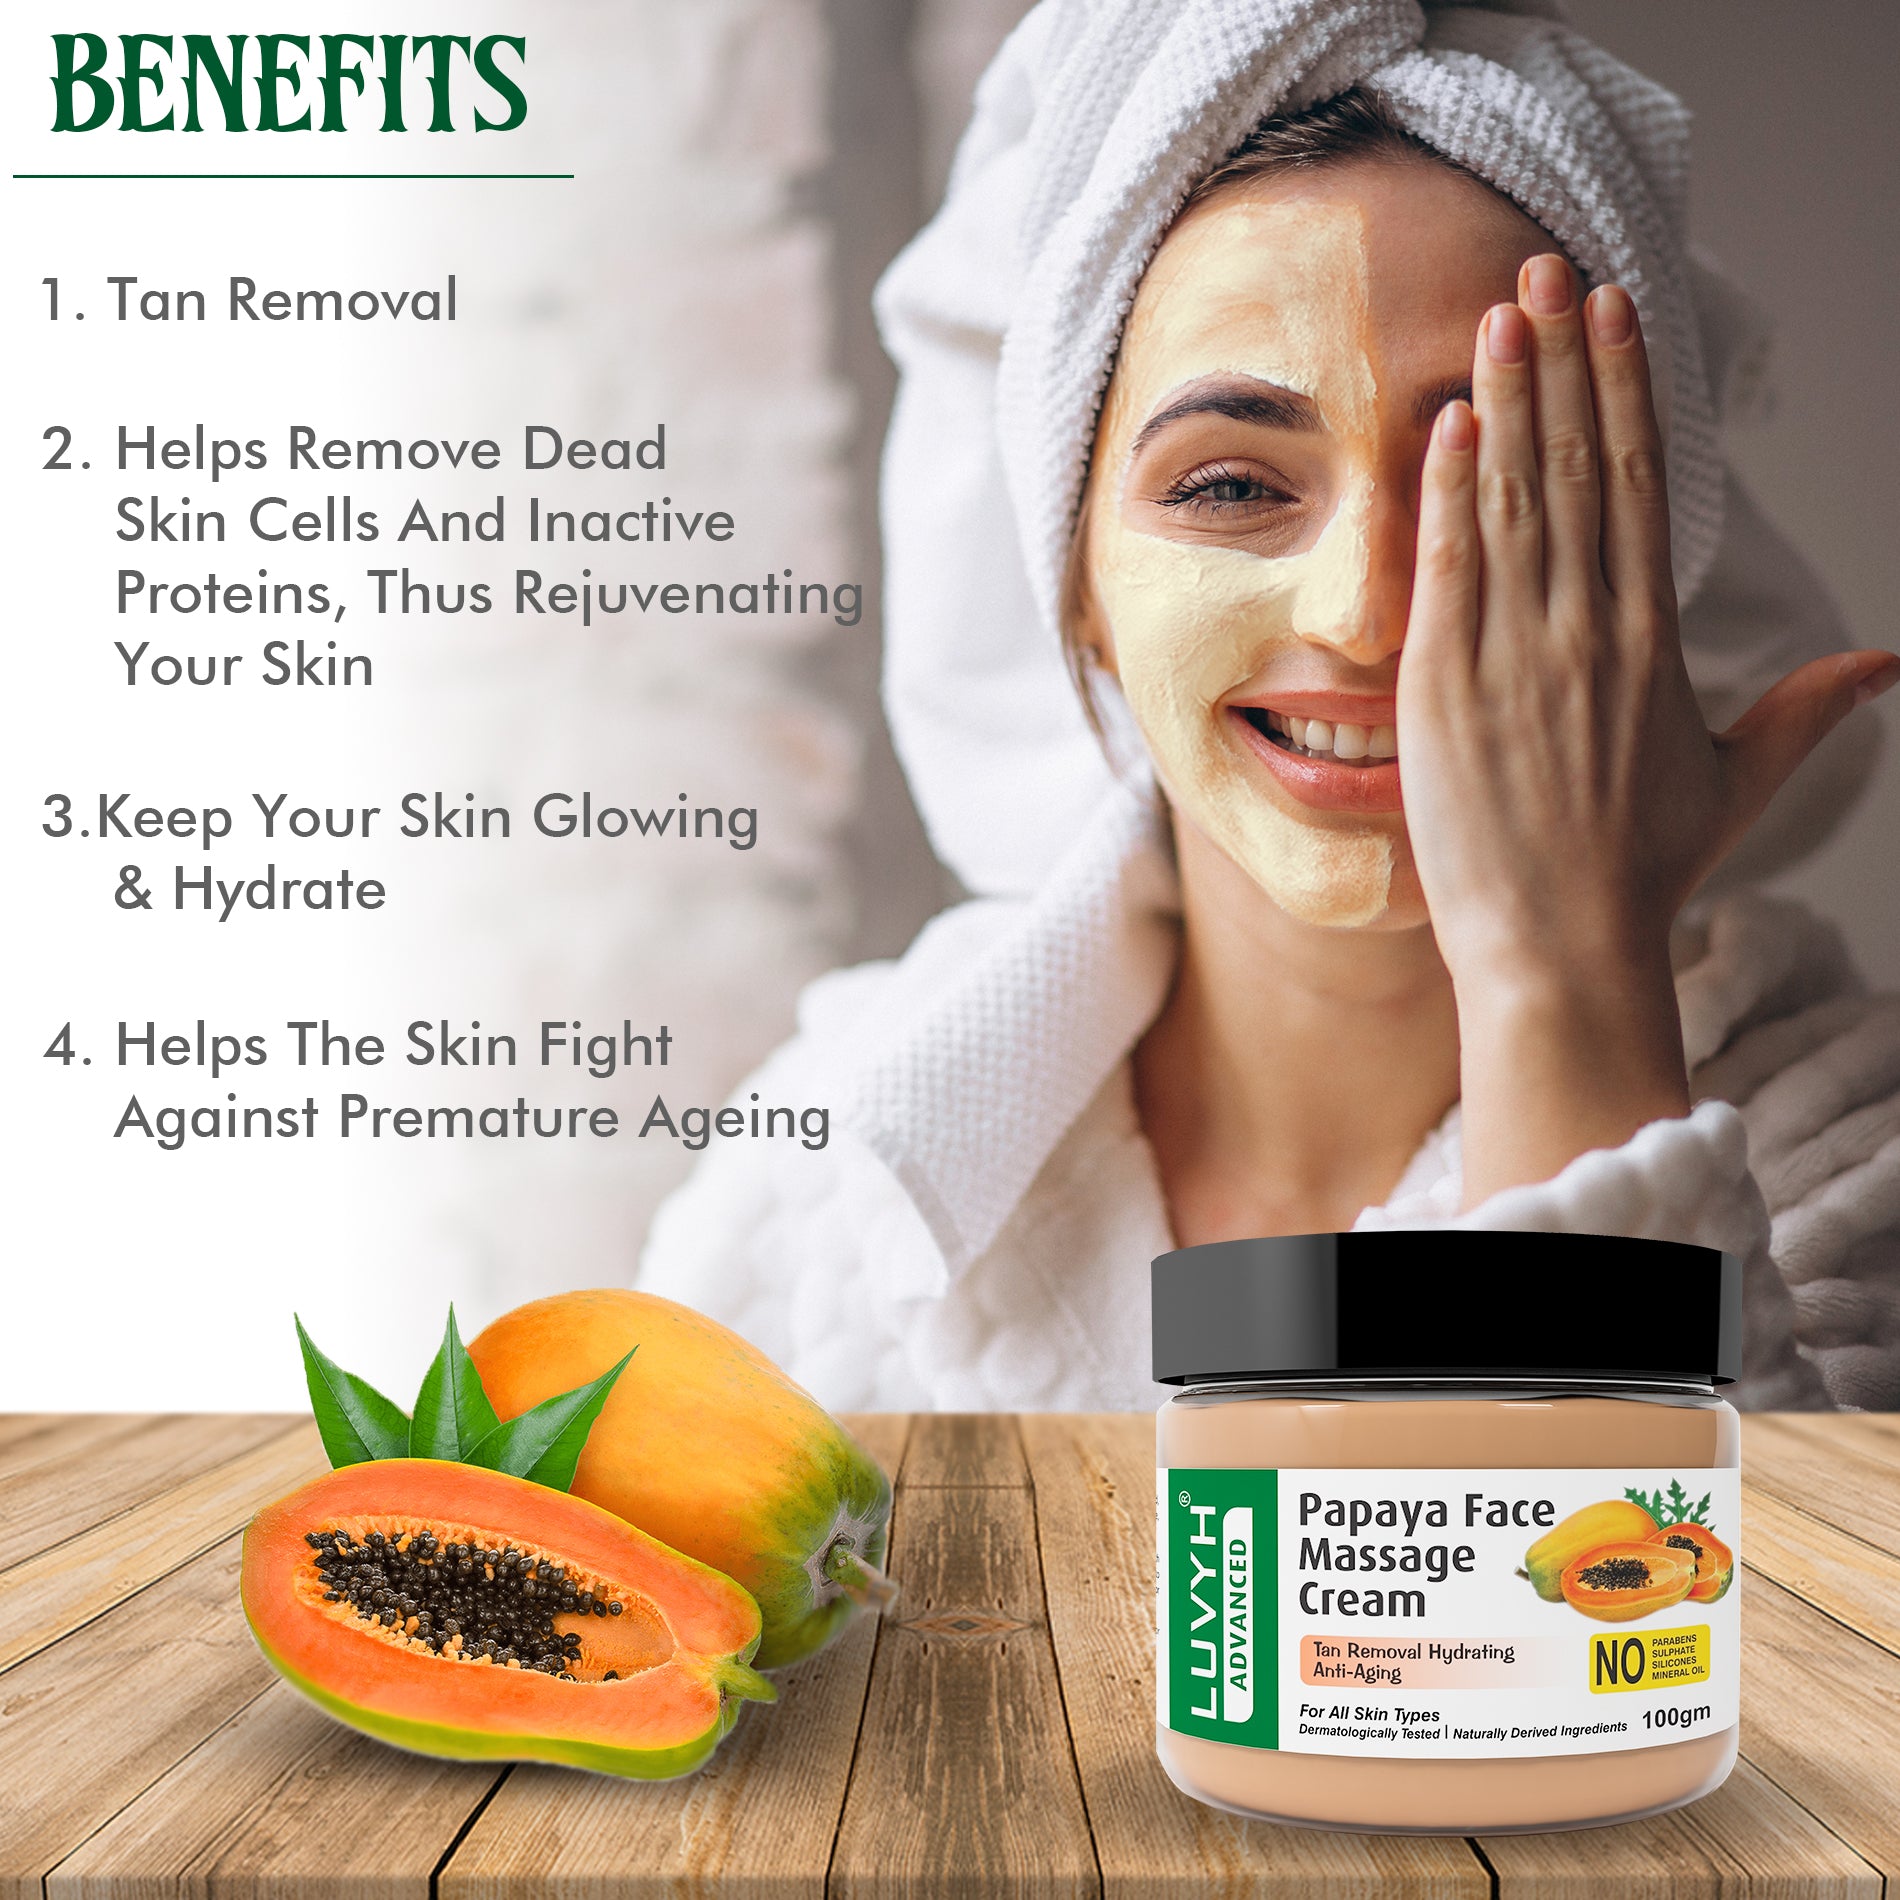 Benefits of  Papaya Face Massage Cream